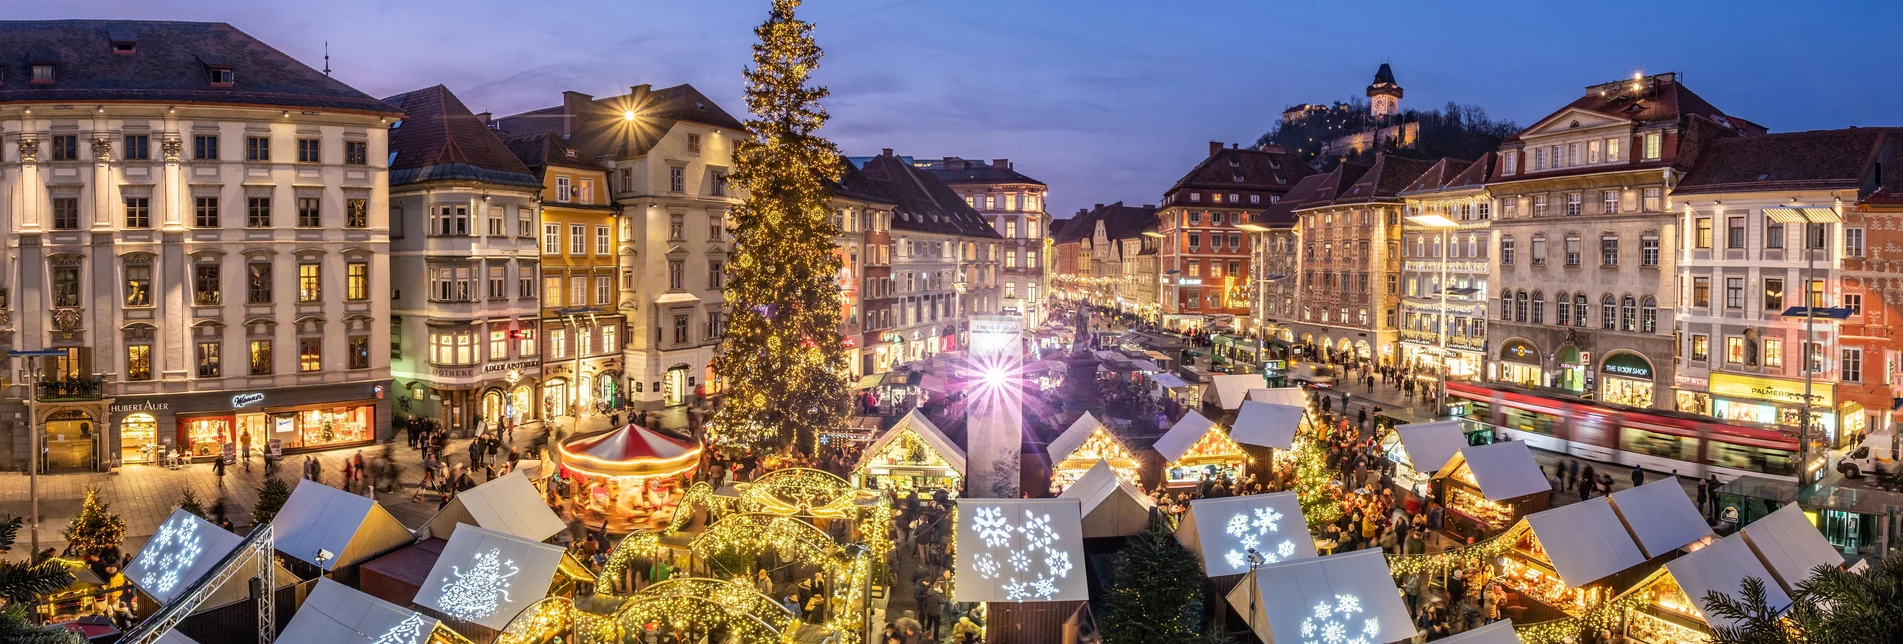 Advent market in Graz | © Graz Tourism | Rene Walter